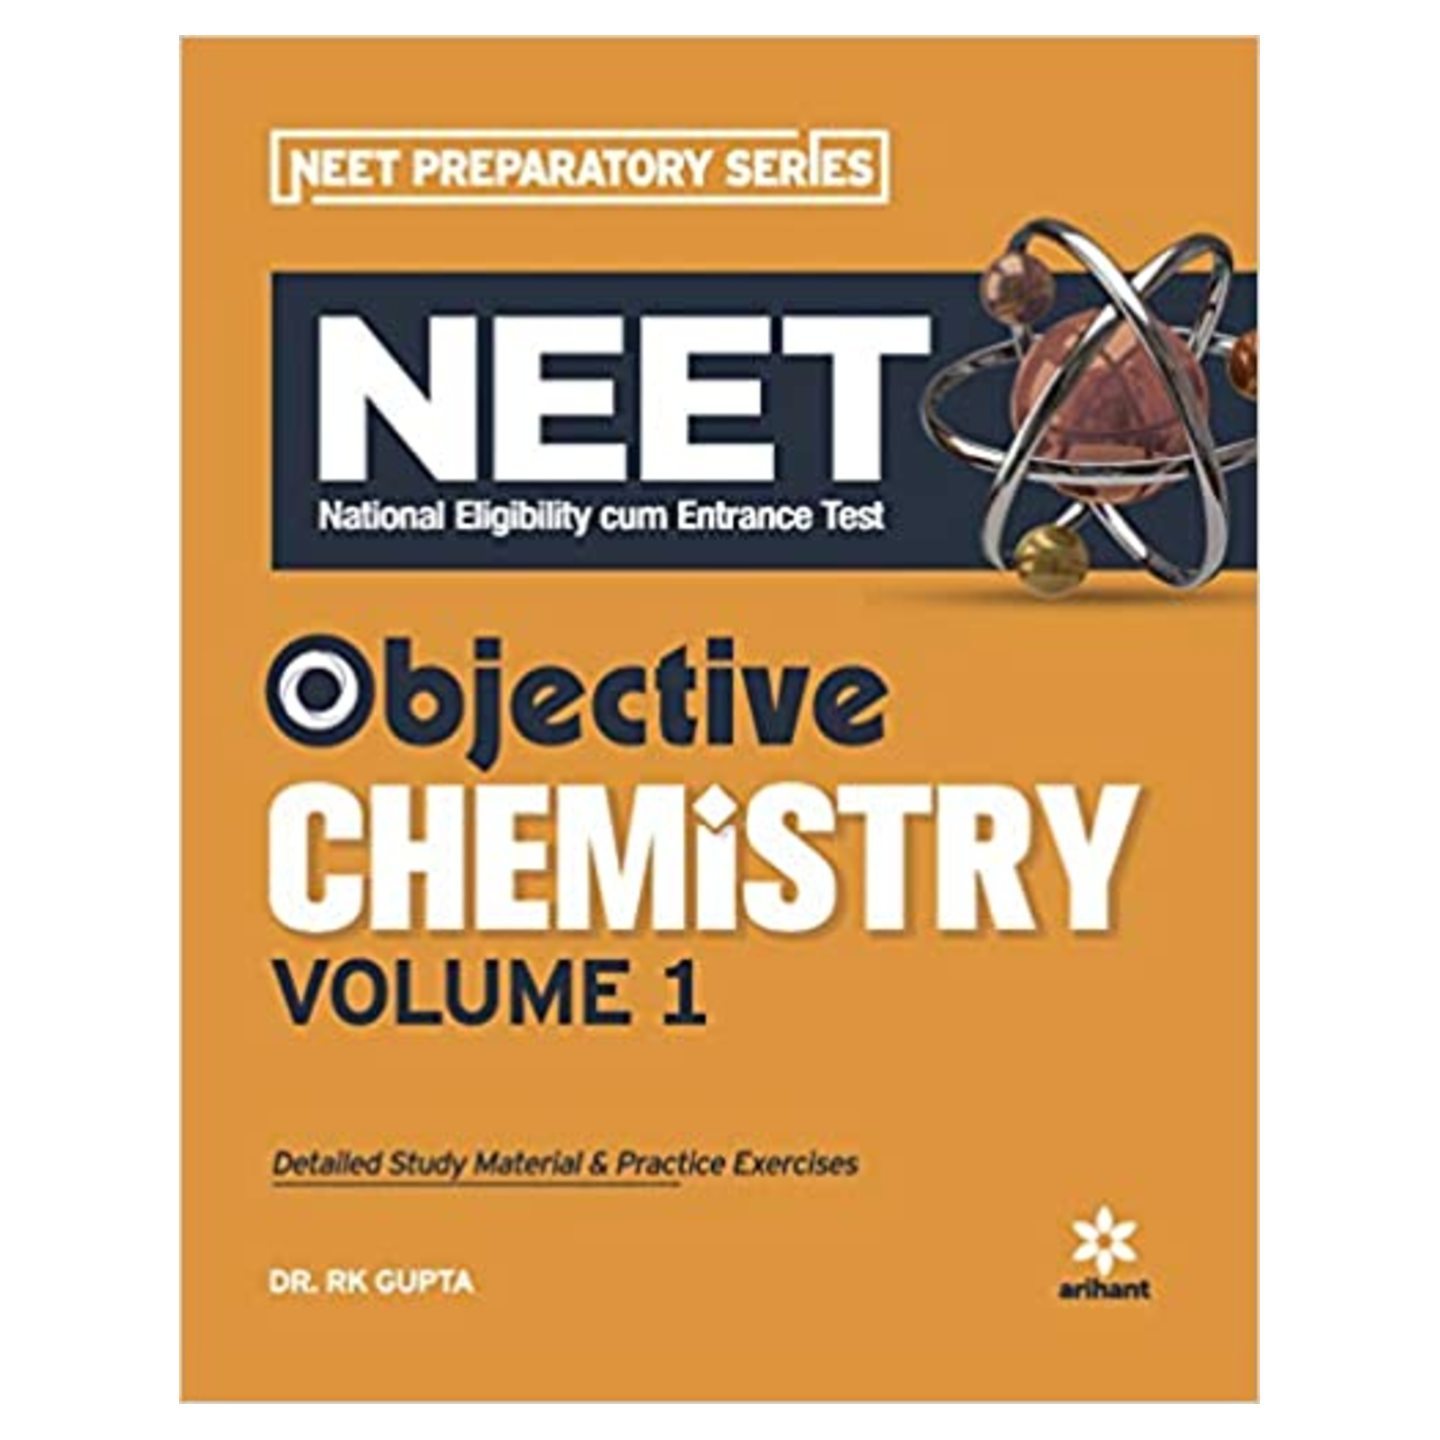 ARIHANT Objective Chemistry for NEET - Vol. 1 RK GUPTA